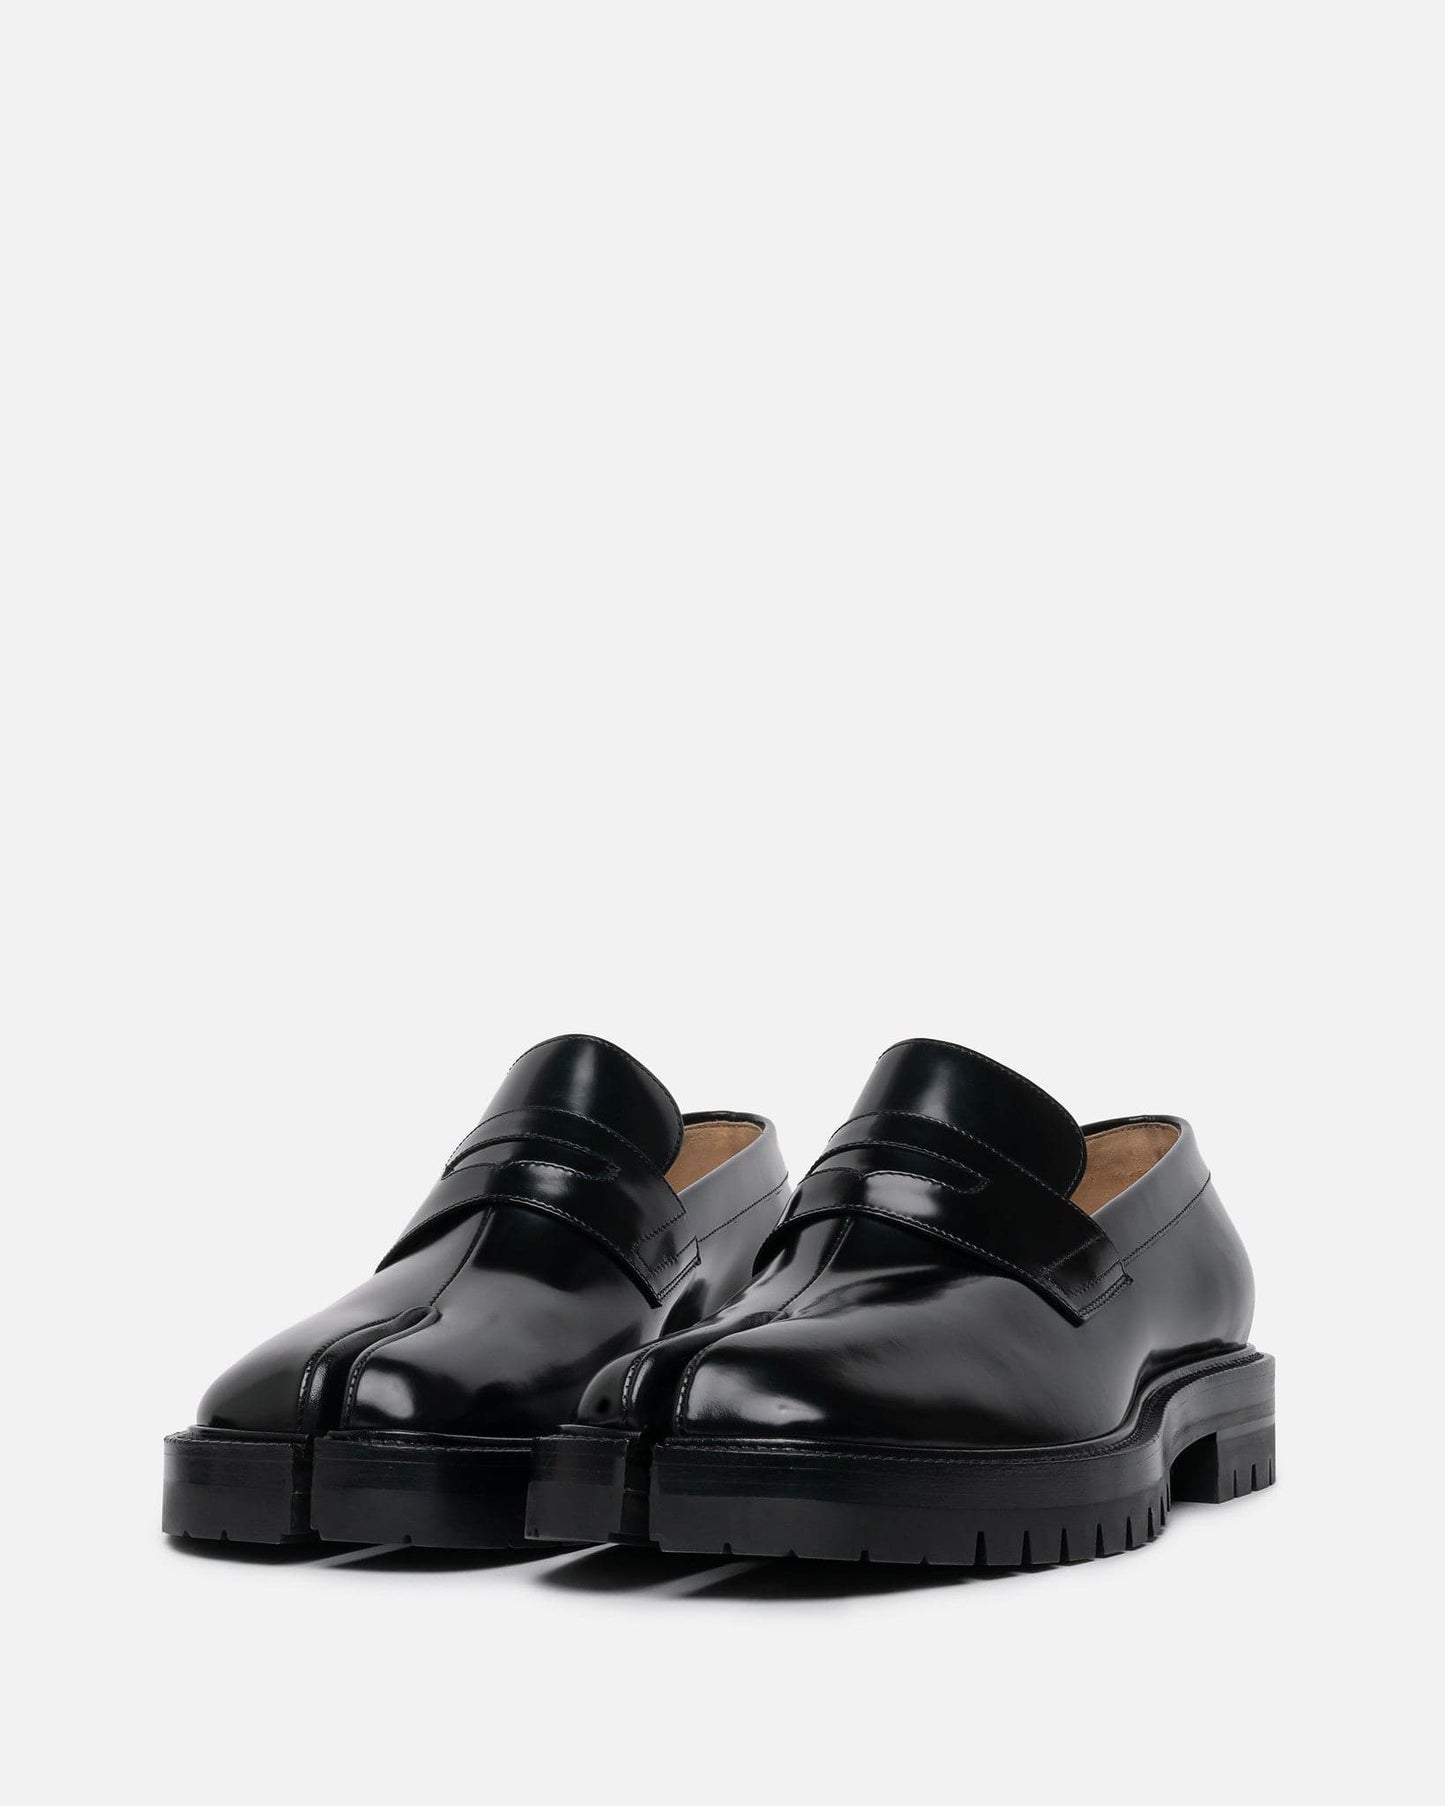 Maison Margiela Men's Shoes Tabi Loafers in Black